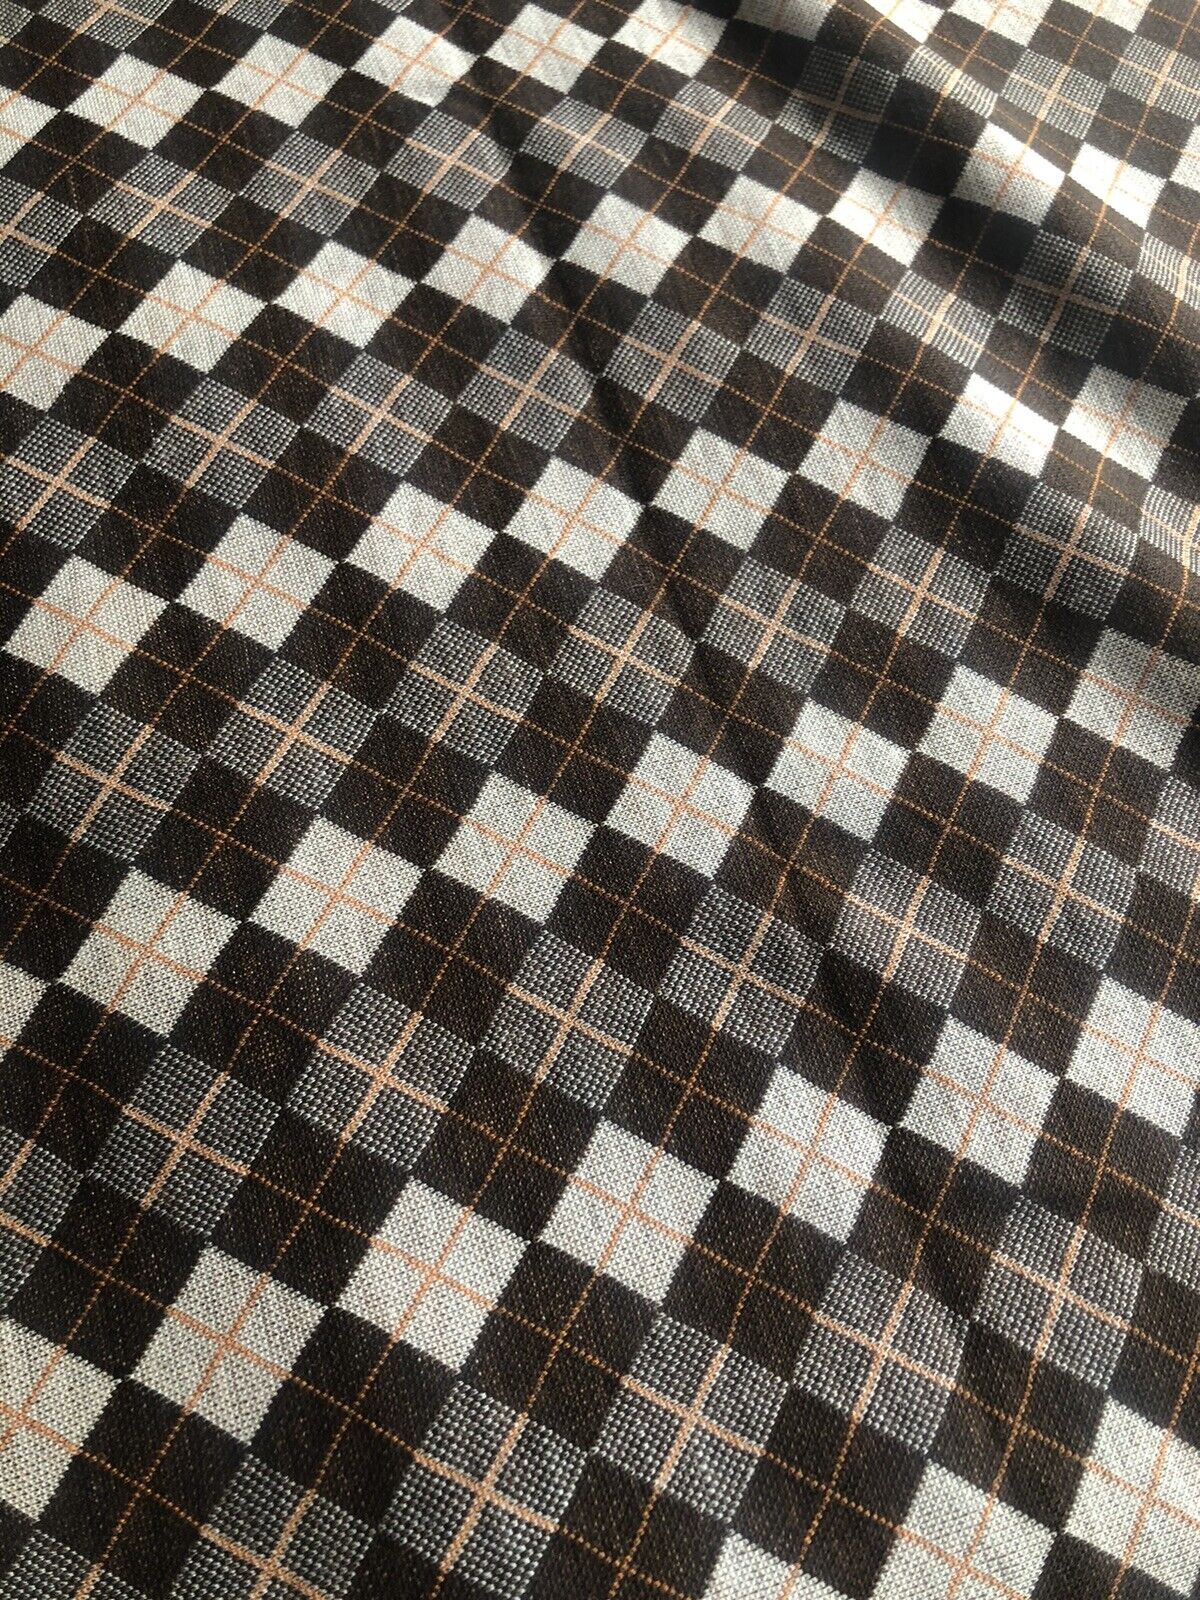 vintage plaid argyle Fabric Remnant. Brown Approx 65”x52” Slight Stretch